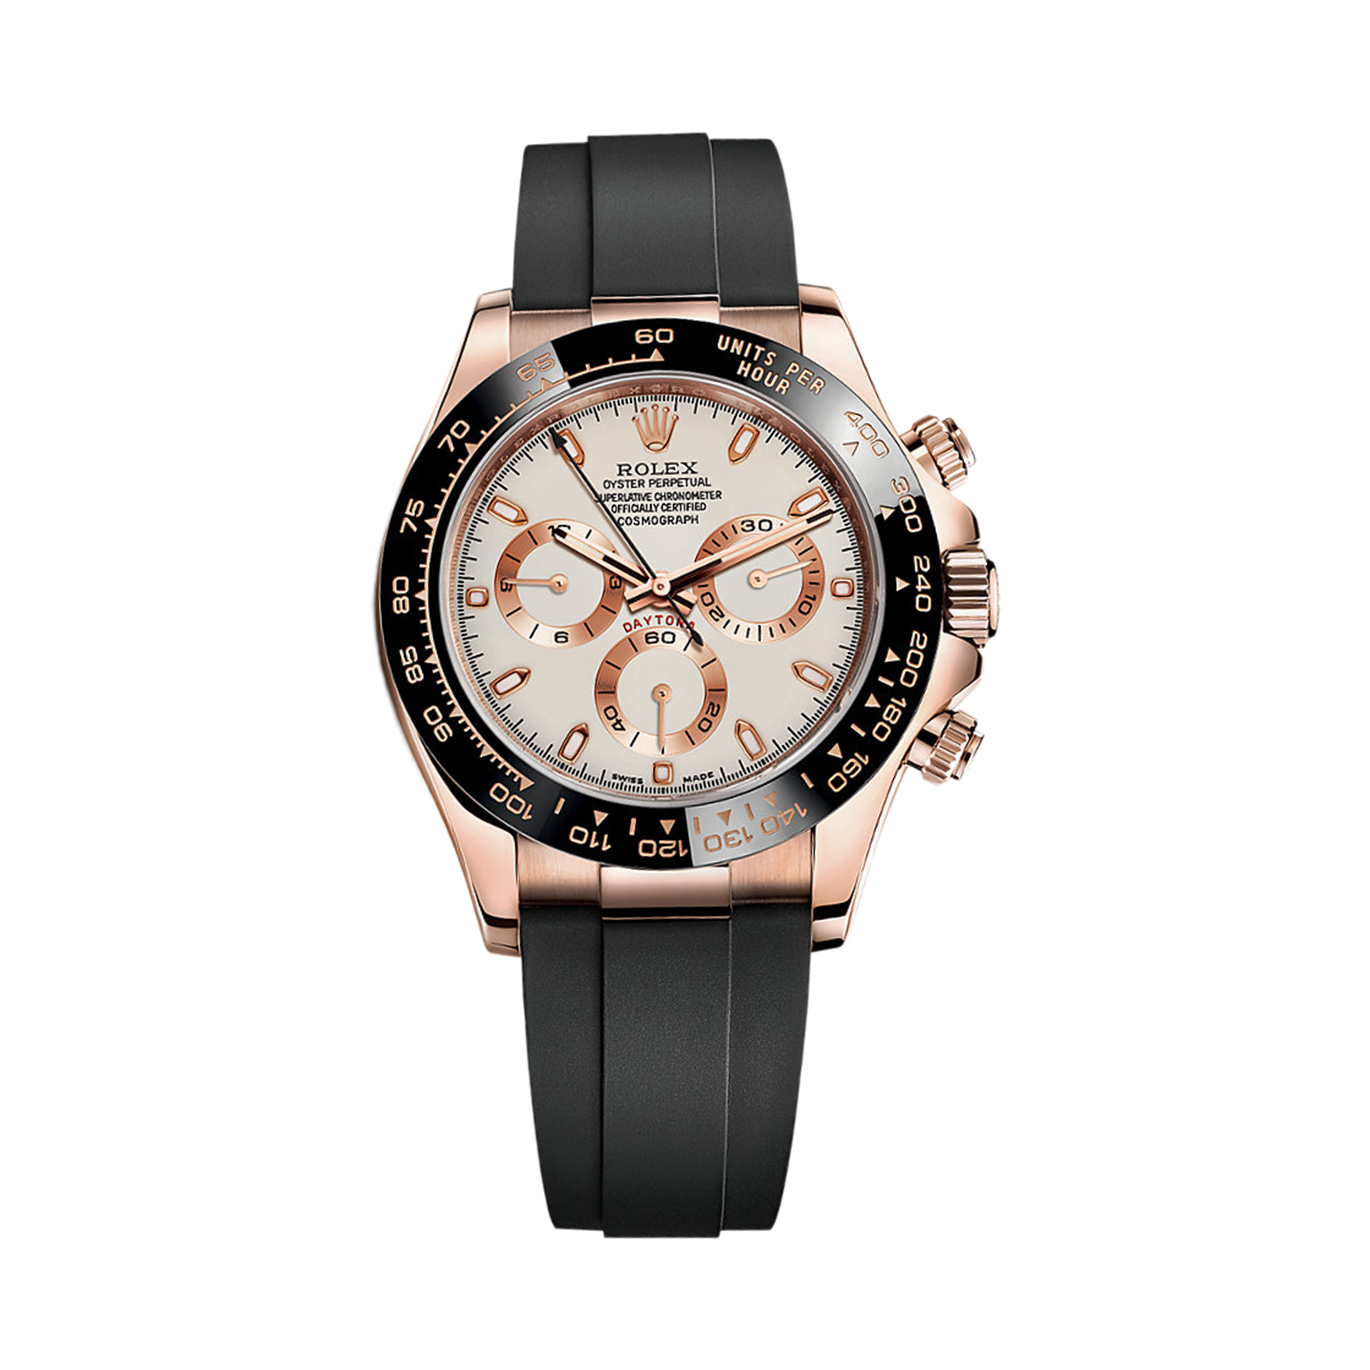 Cosmograph Daytona 116515LN Rose Gold Watch (Ivory-Coloured)